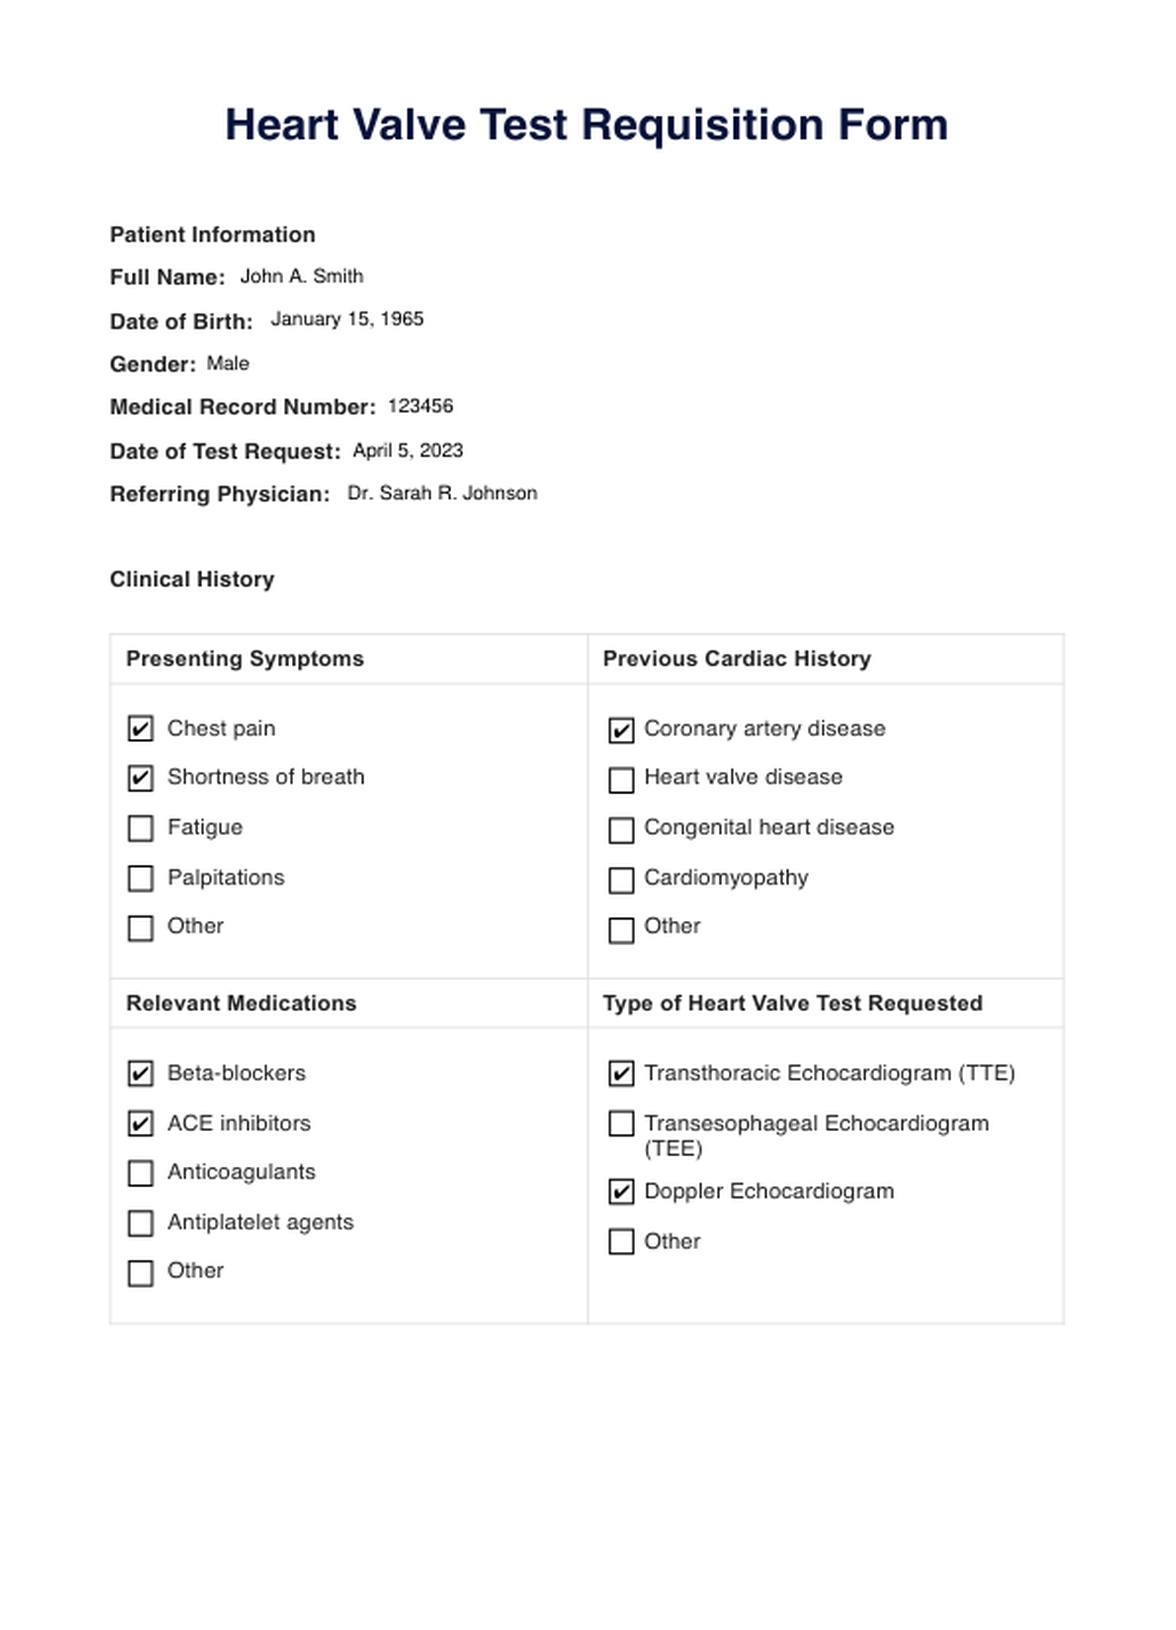 Heart Valve Test PDF Example